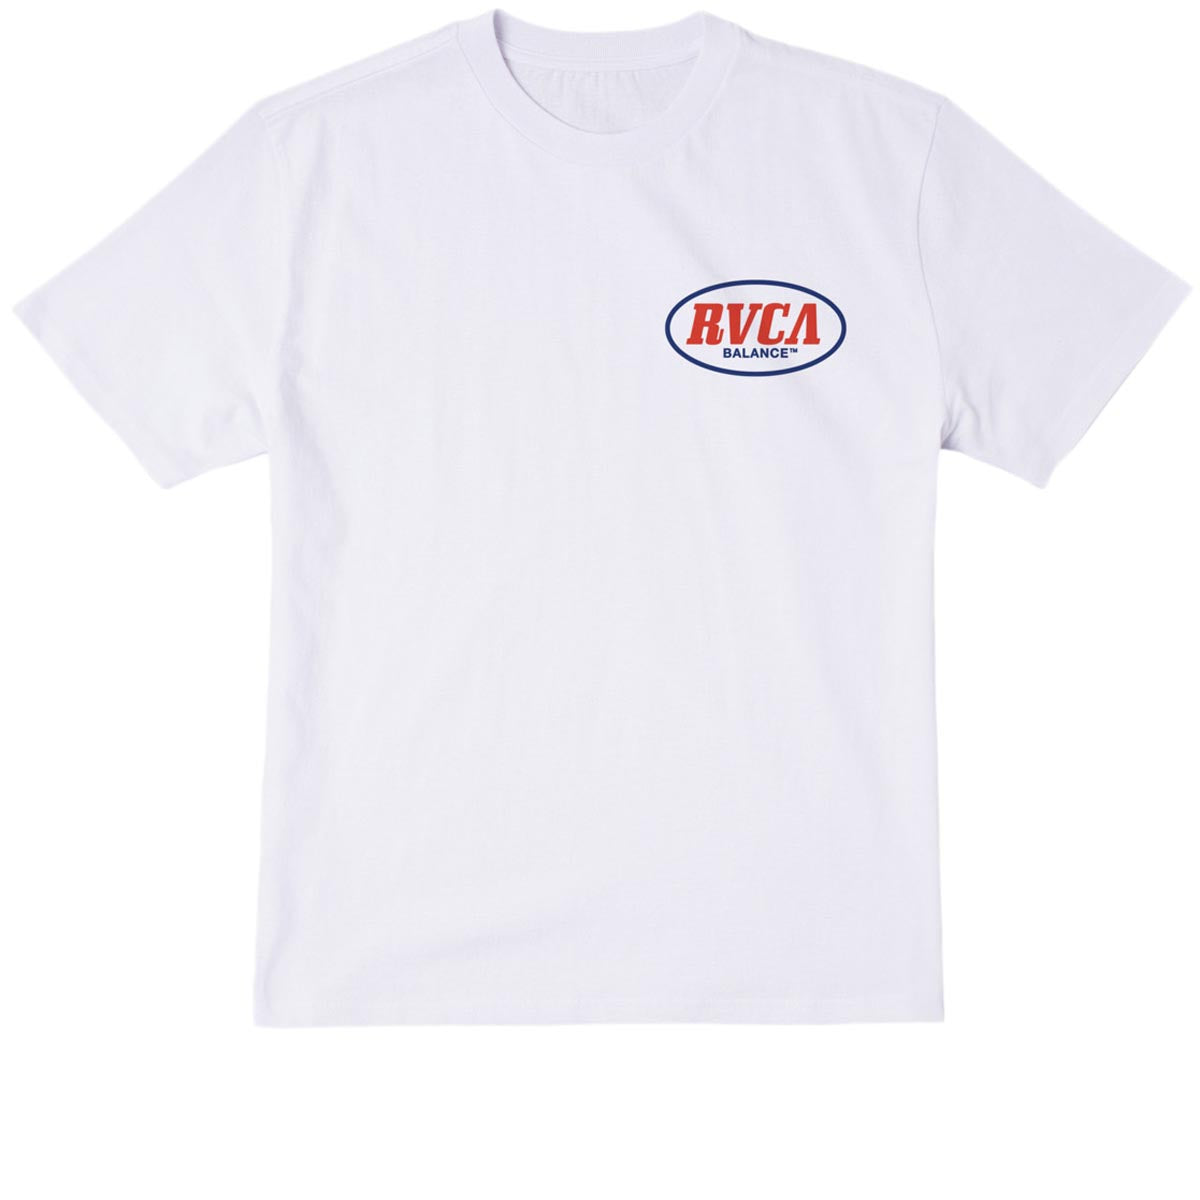 RVCA Basecamp T-Shirt - White image 1